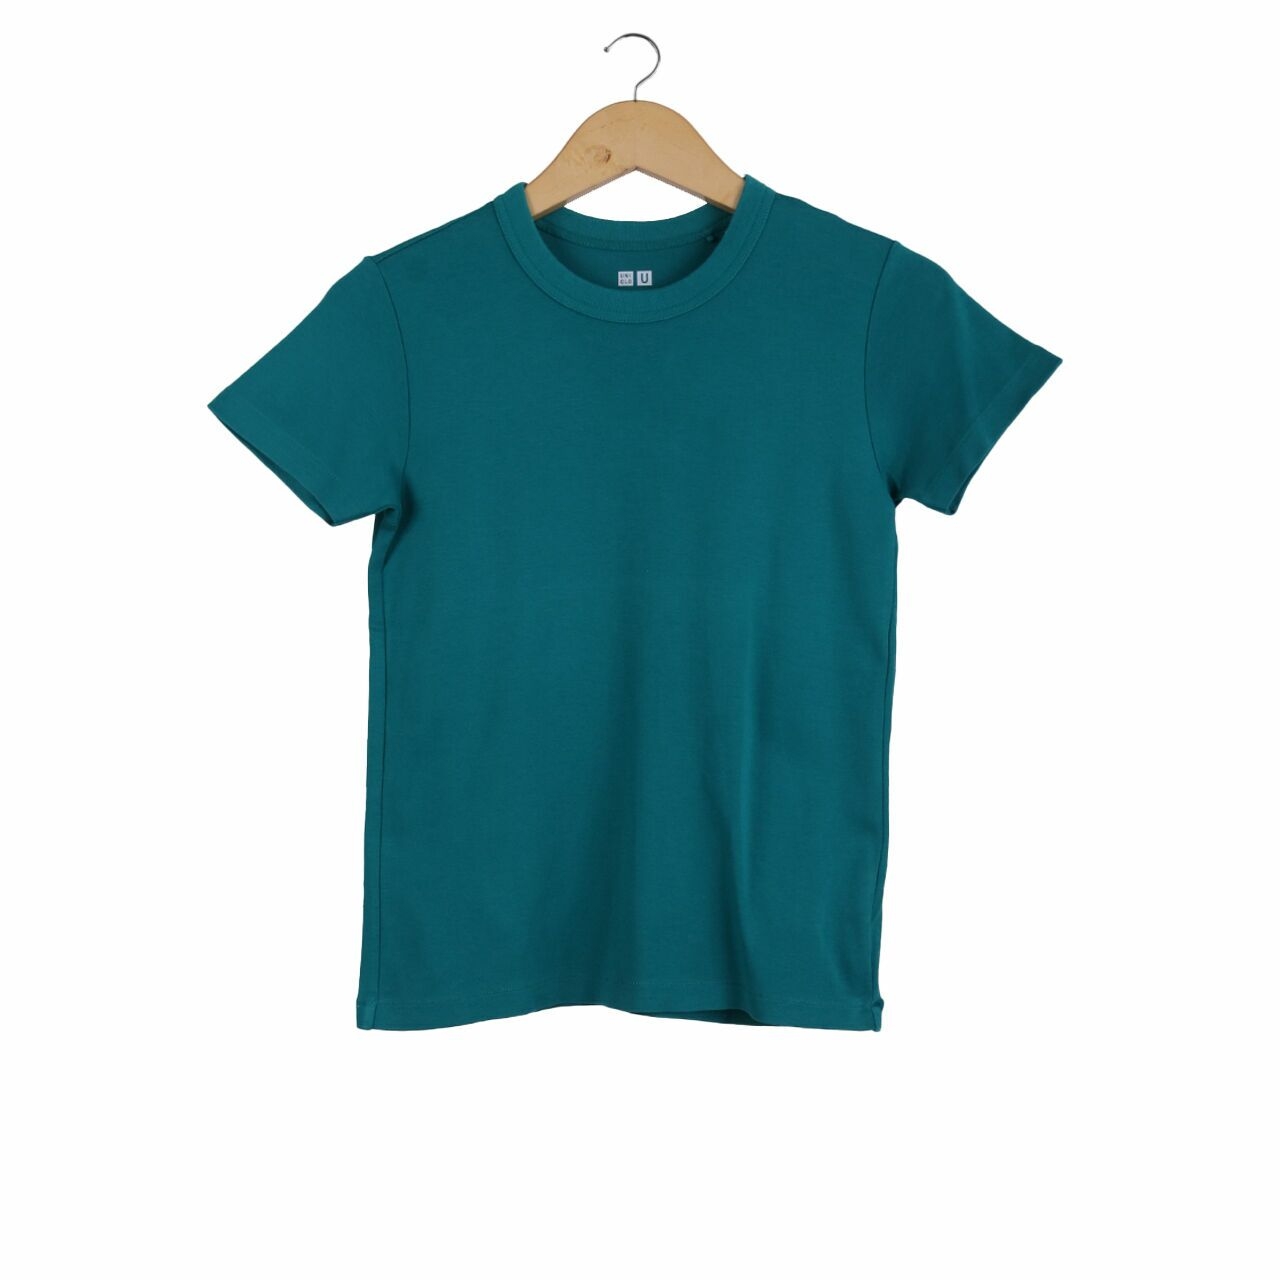 UNIQLO Teal Green Tshirt